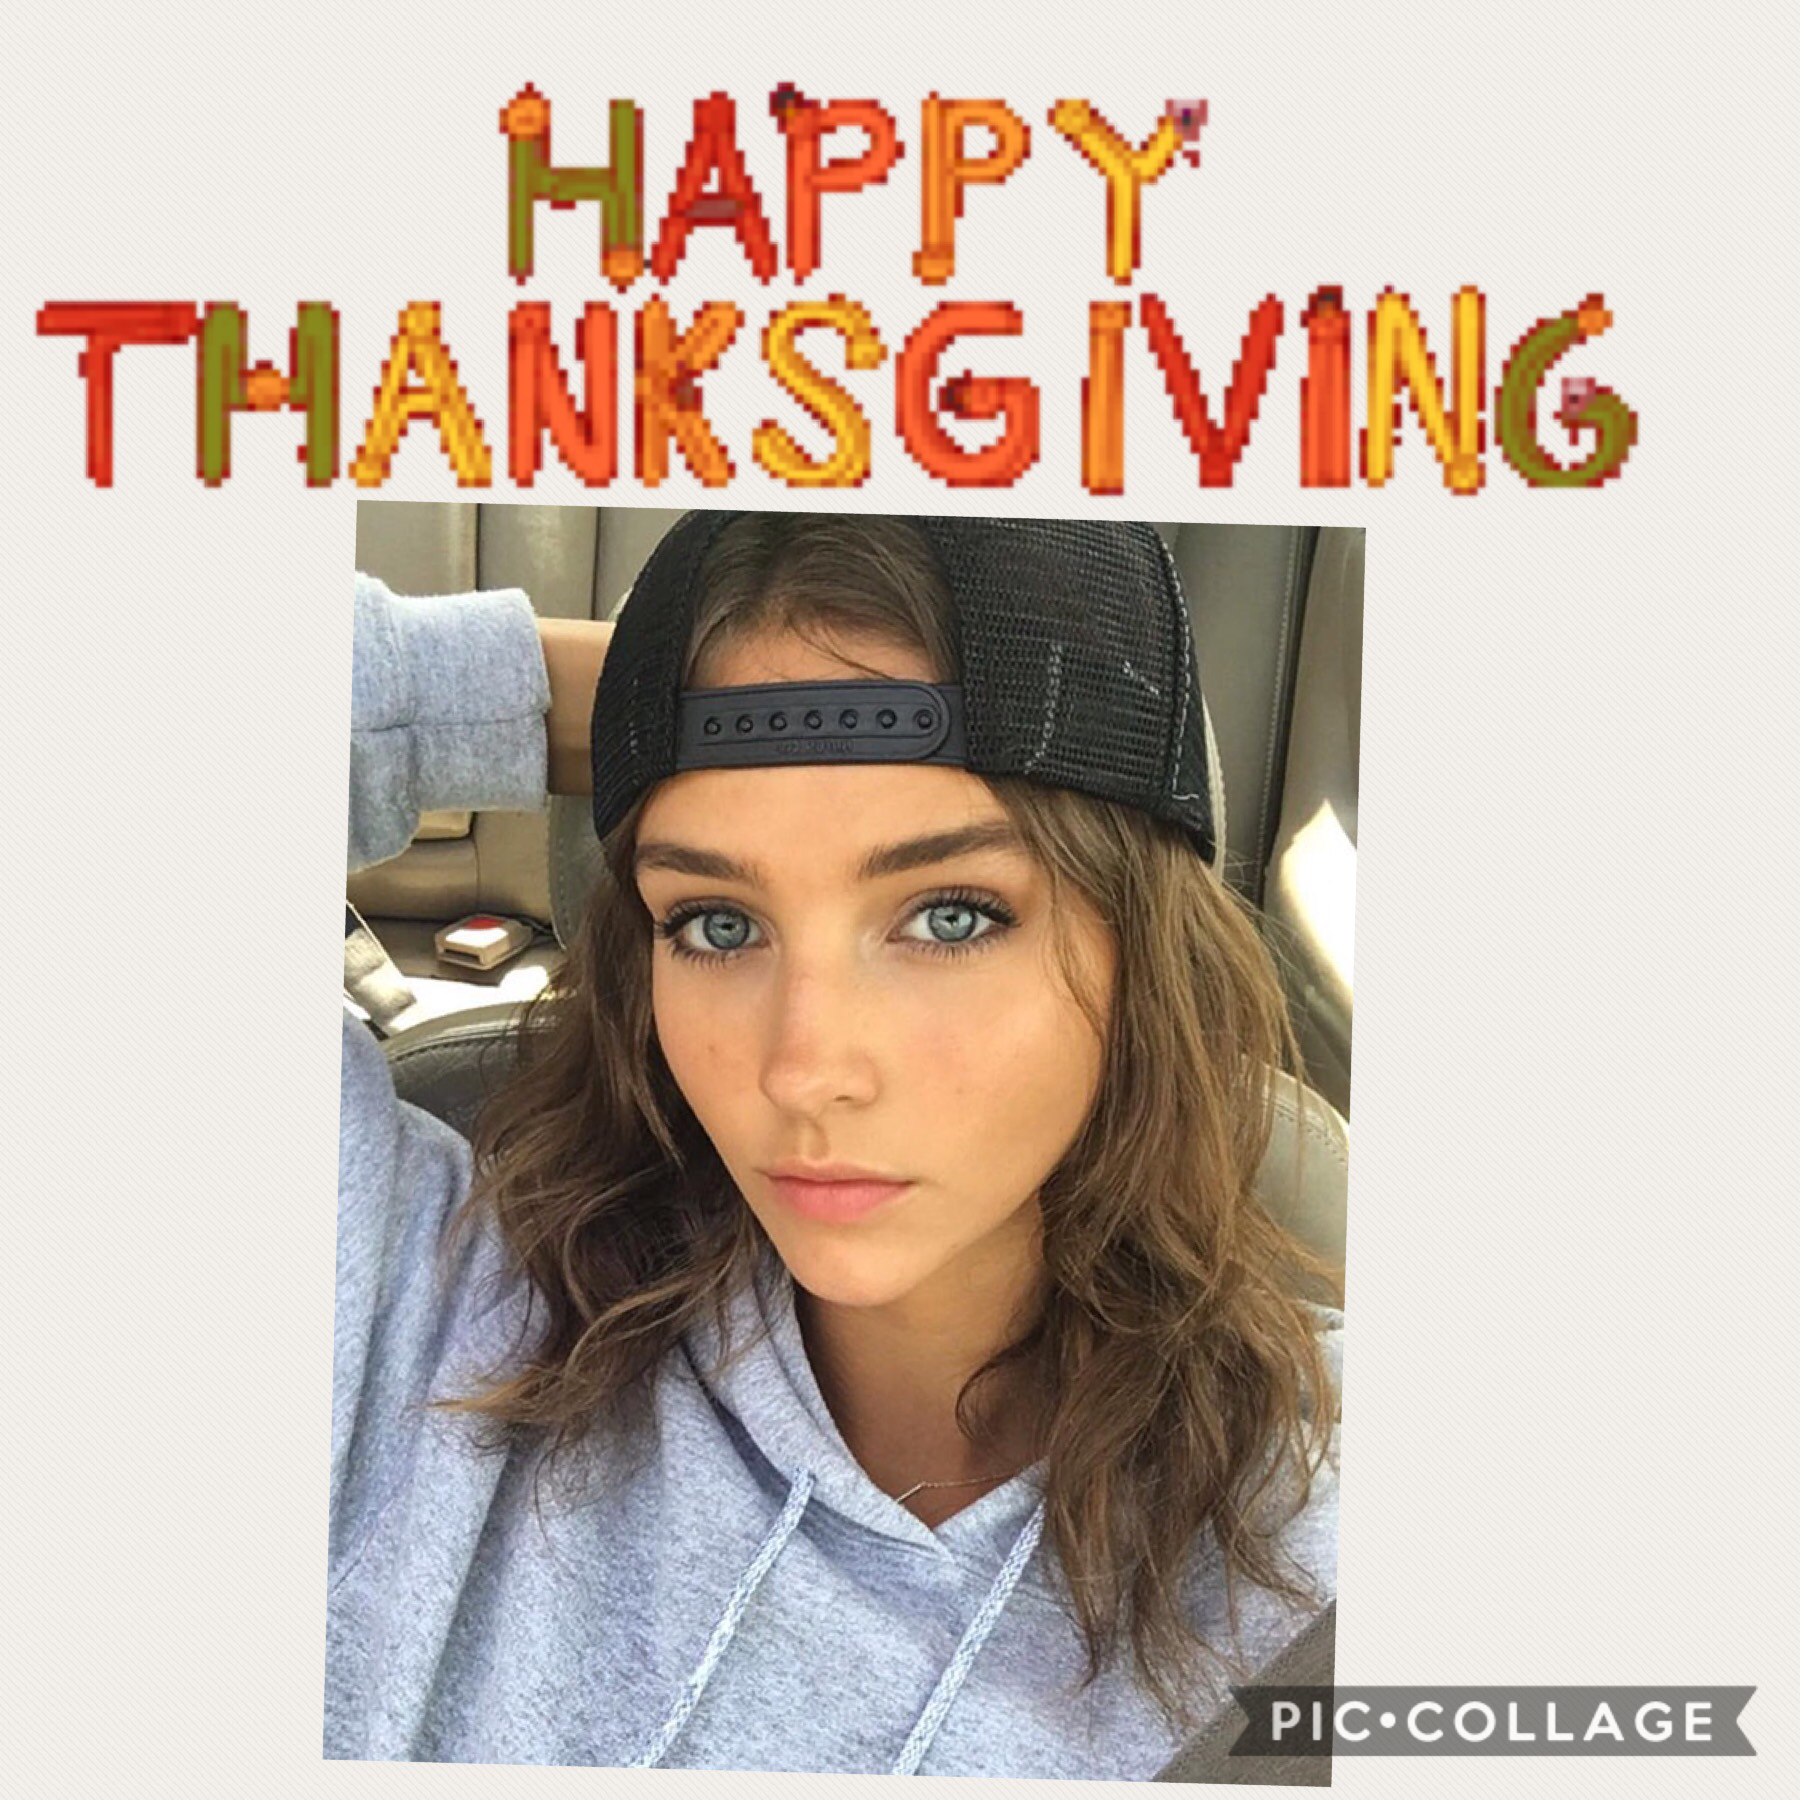 Happy thanksgiving!
